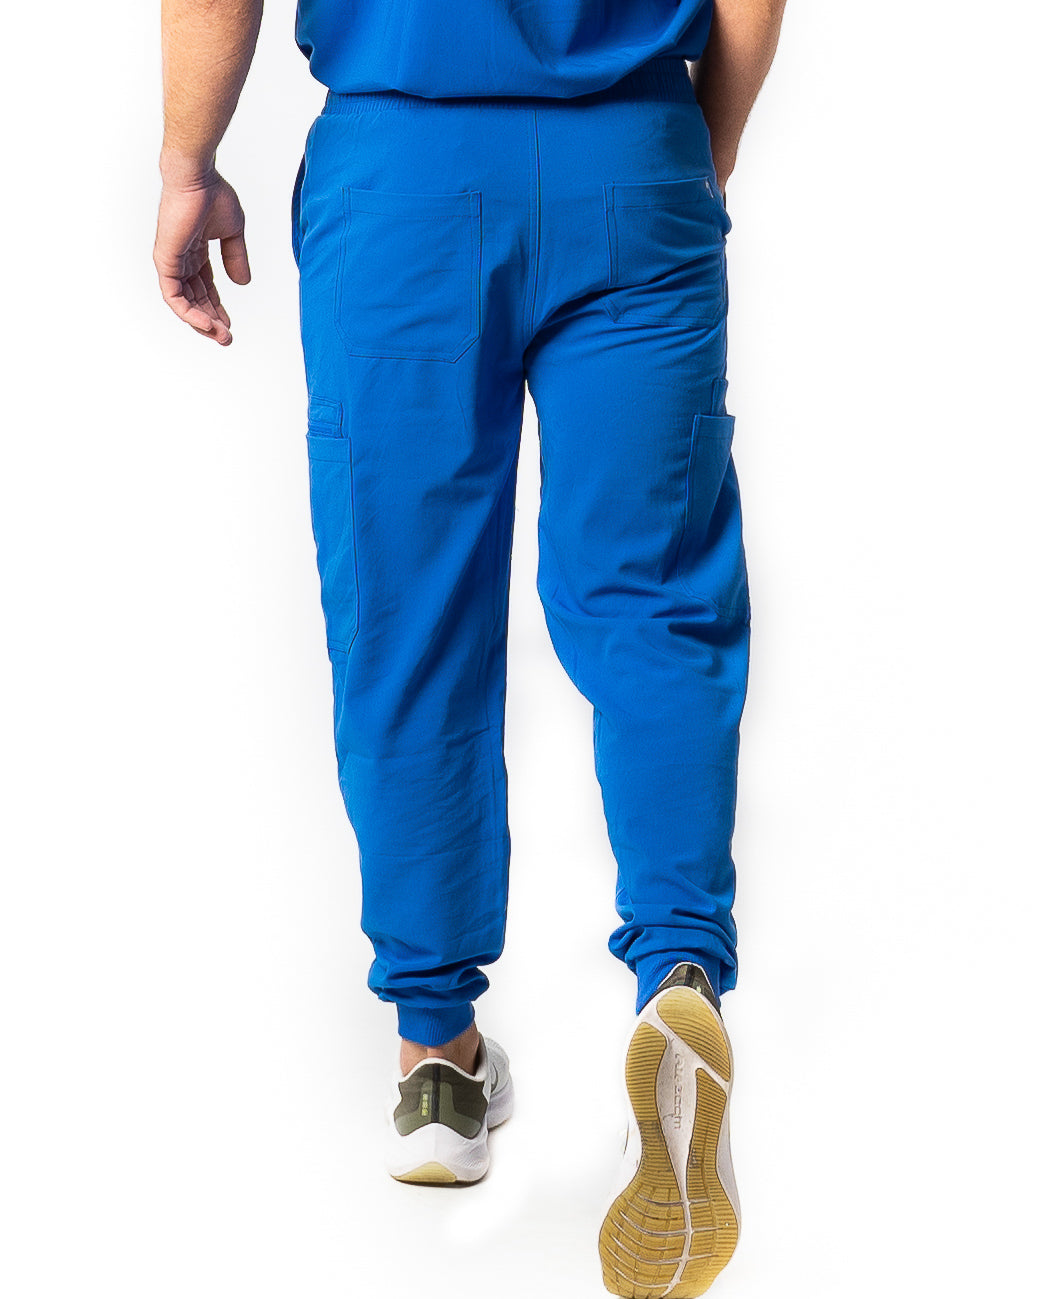 men's Royal Blue Jogger Scrub Pants - Jogger Scrubs by Millennials In Medicine (Mim Scrubs)